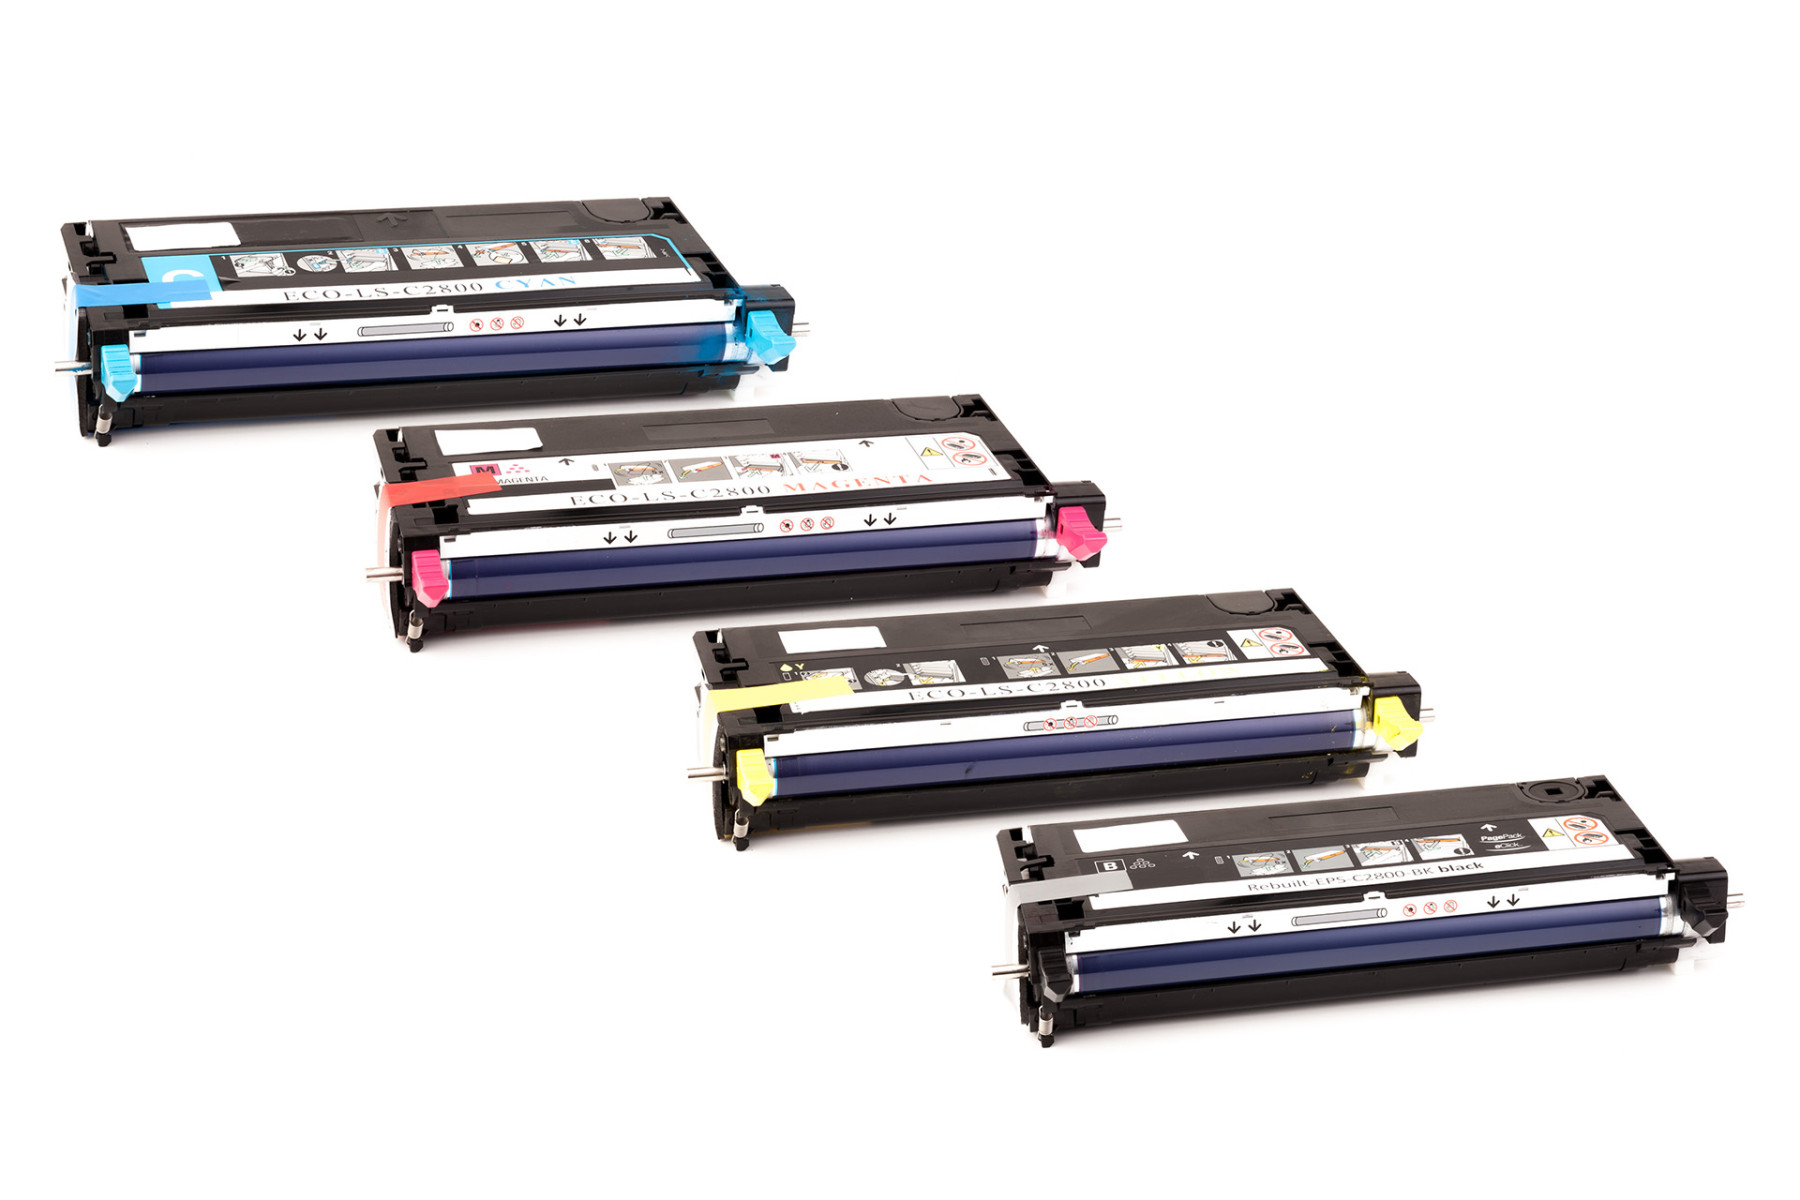 Set consisting of Toner cartridge (alternative) compatible with Epson - C 13 S0 51161 / C13S051161 - Aculaser C 2800 / Aculaser C 2800 DN / Aculaser C 2800 DTN / Aculaser C 2800 N black, 51160 / C13S051160 - Aculaser C 2800 / Aculaser C 2800 DN / Aculaser